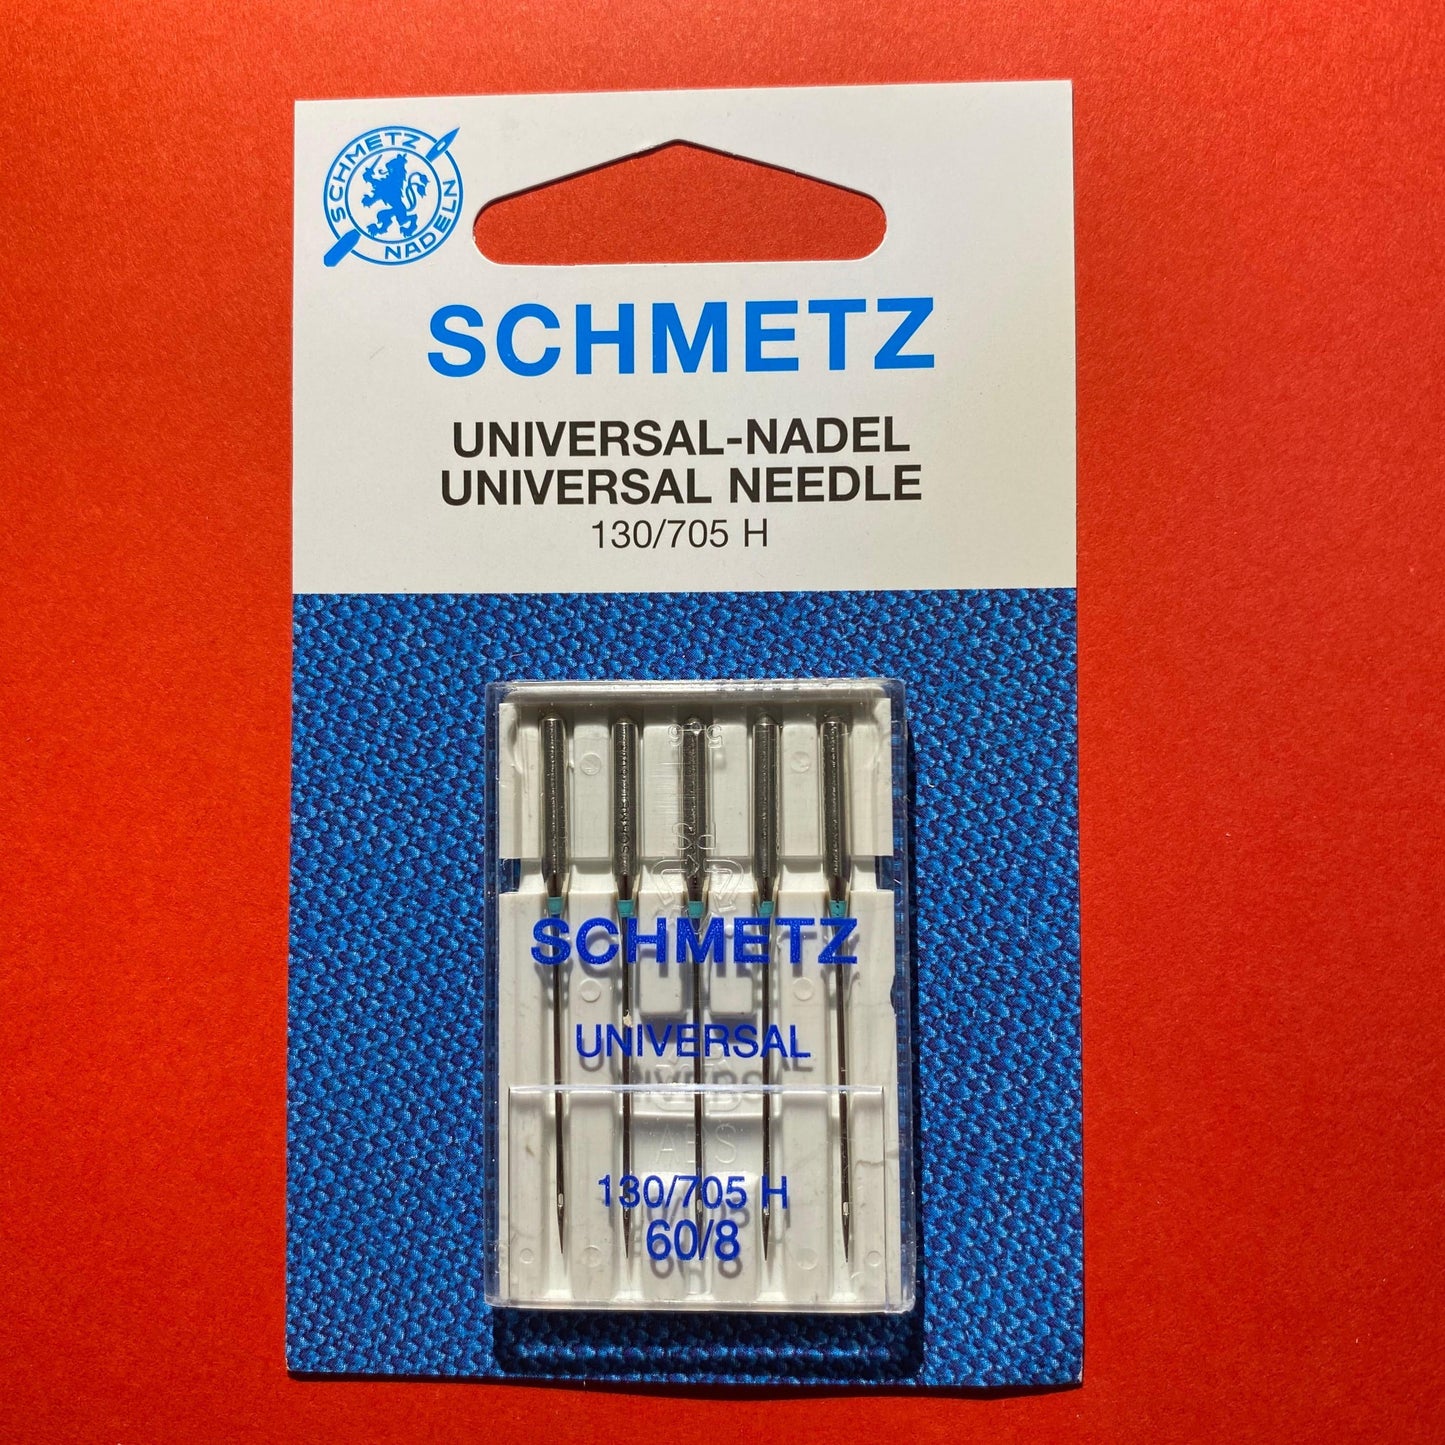 Schmetz Universal Needles 130/705 H 60/8 Sheer to Very Lightweight - 5 pack